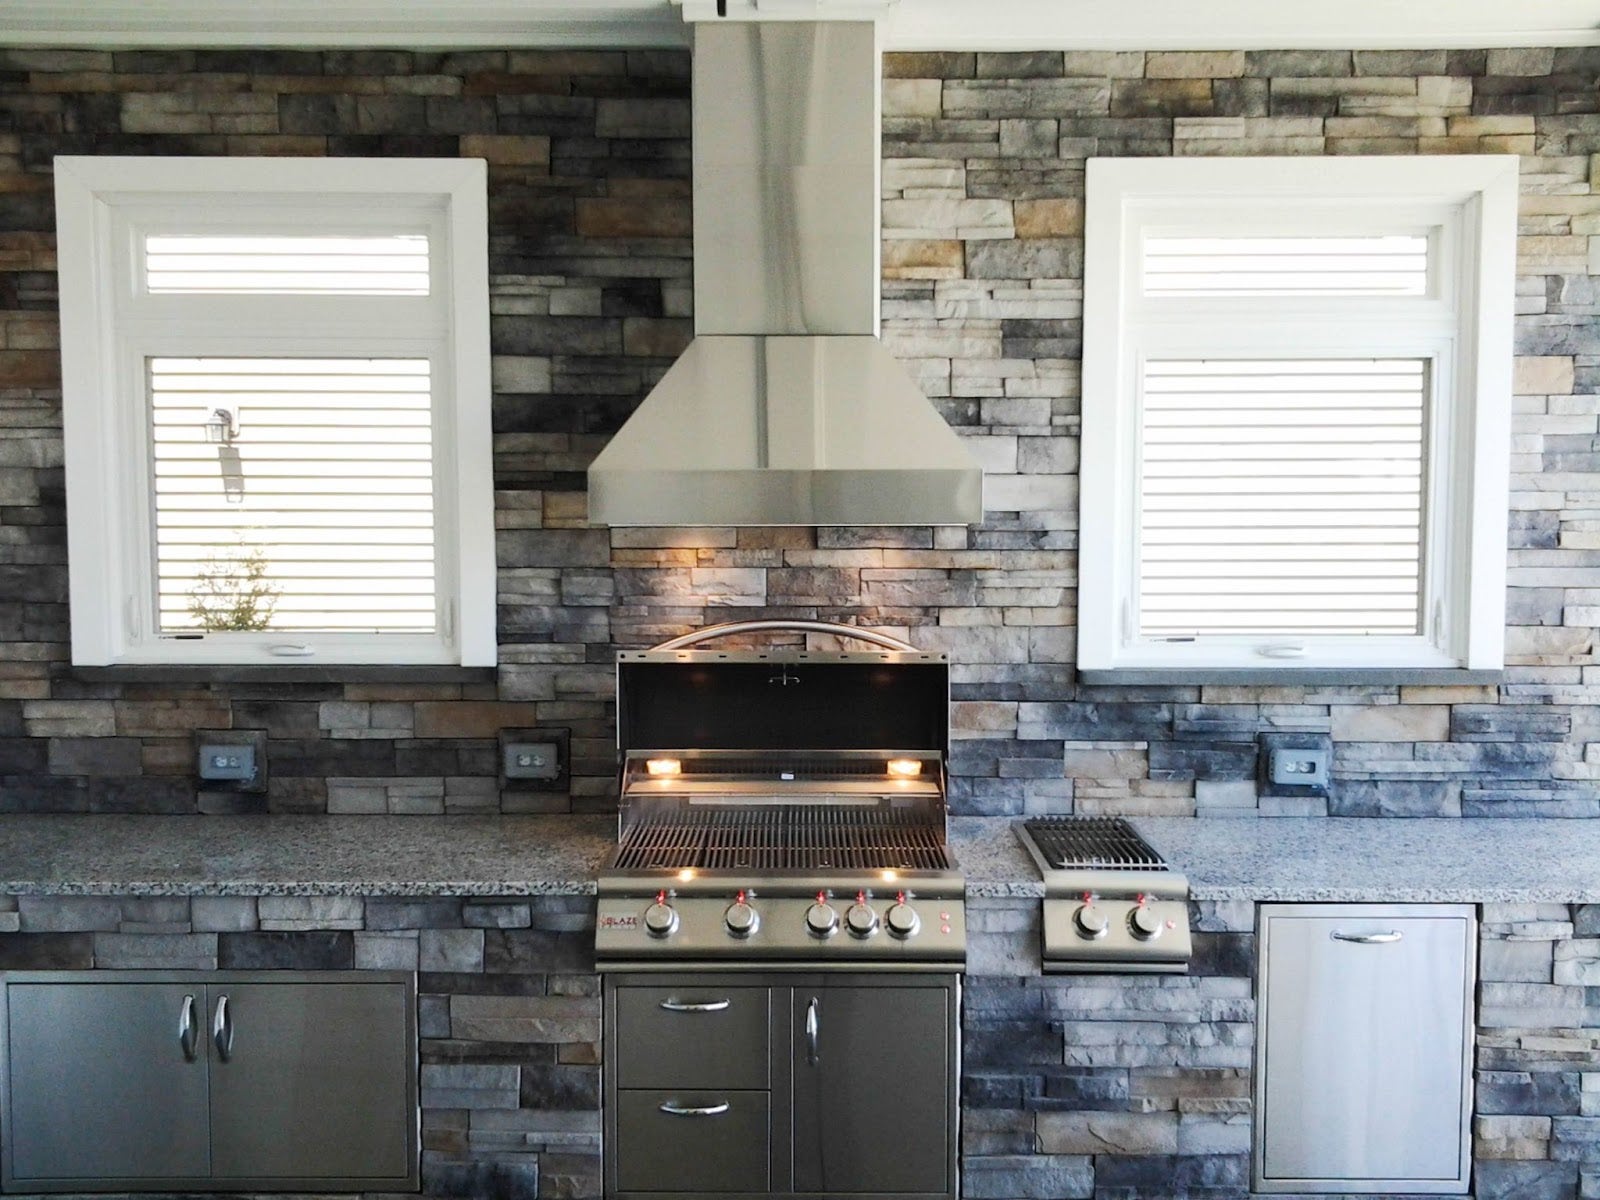 Sleek kitchen design with a stainless steel Proline range hood, matching grill, and granite countertops against a stone tile backsplash - prolinerangehoods.com.